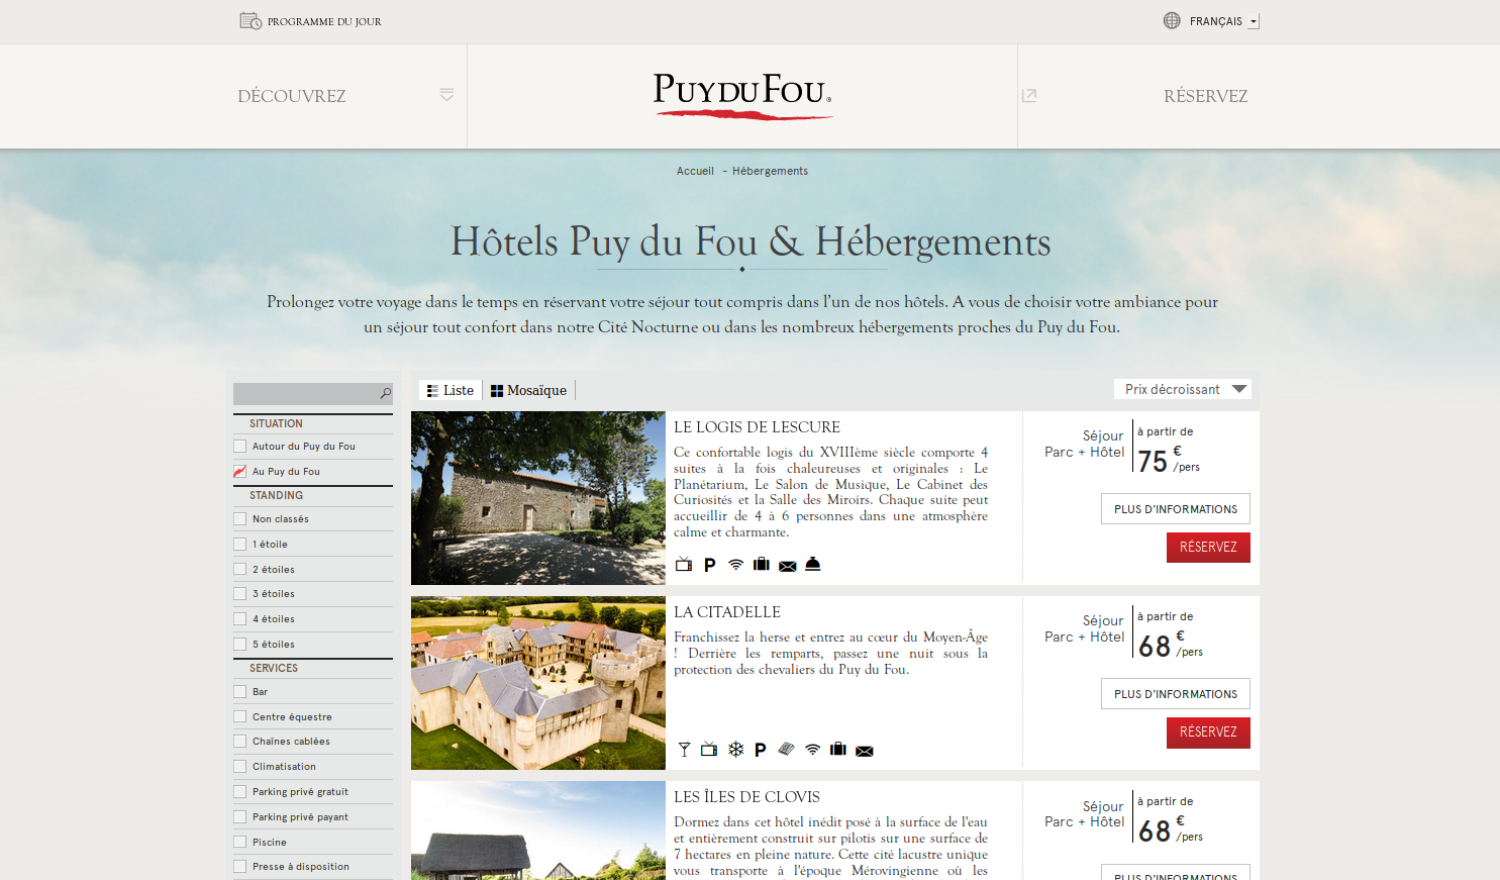 Puy du Fou hotels